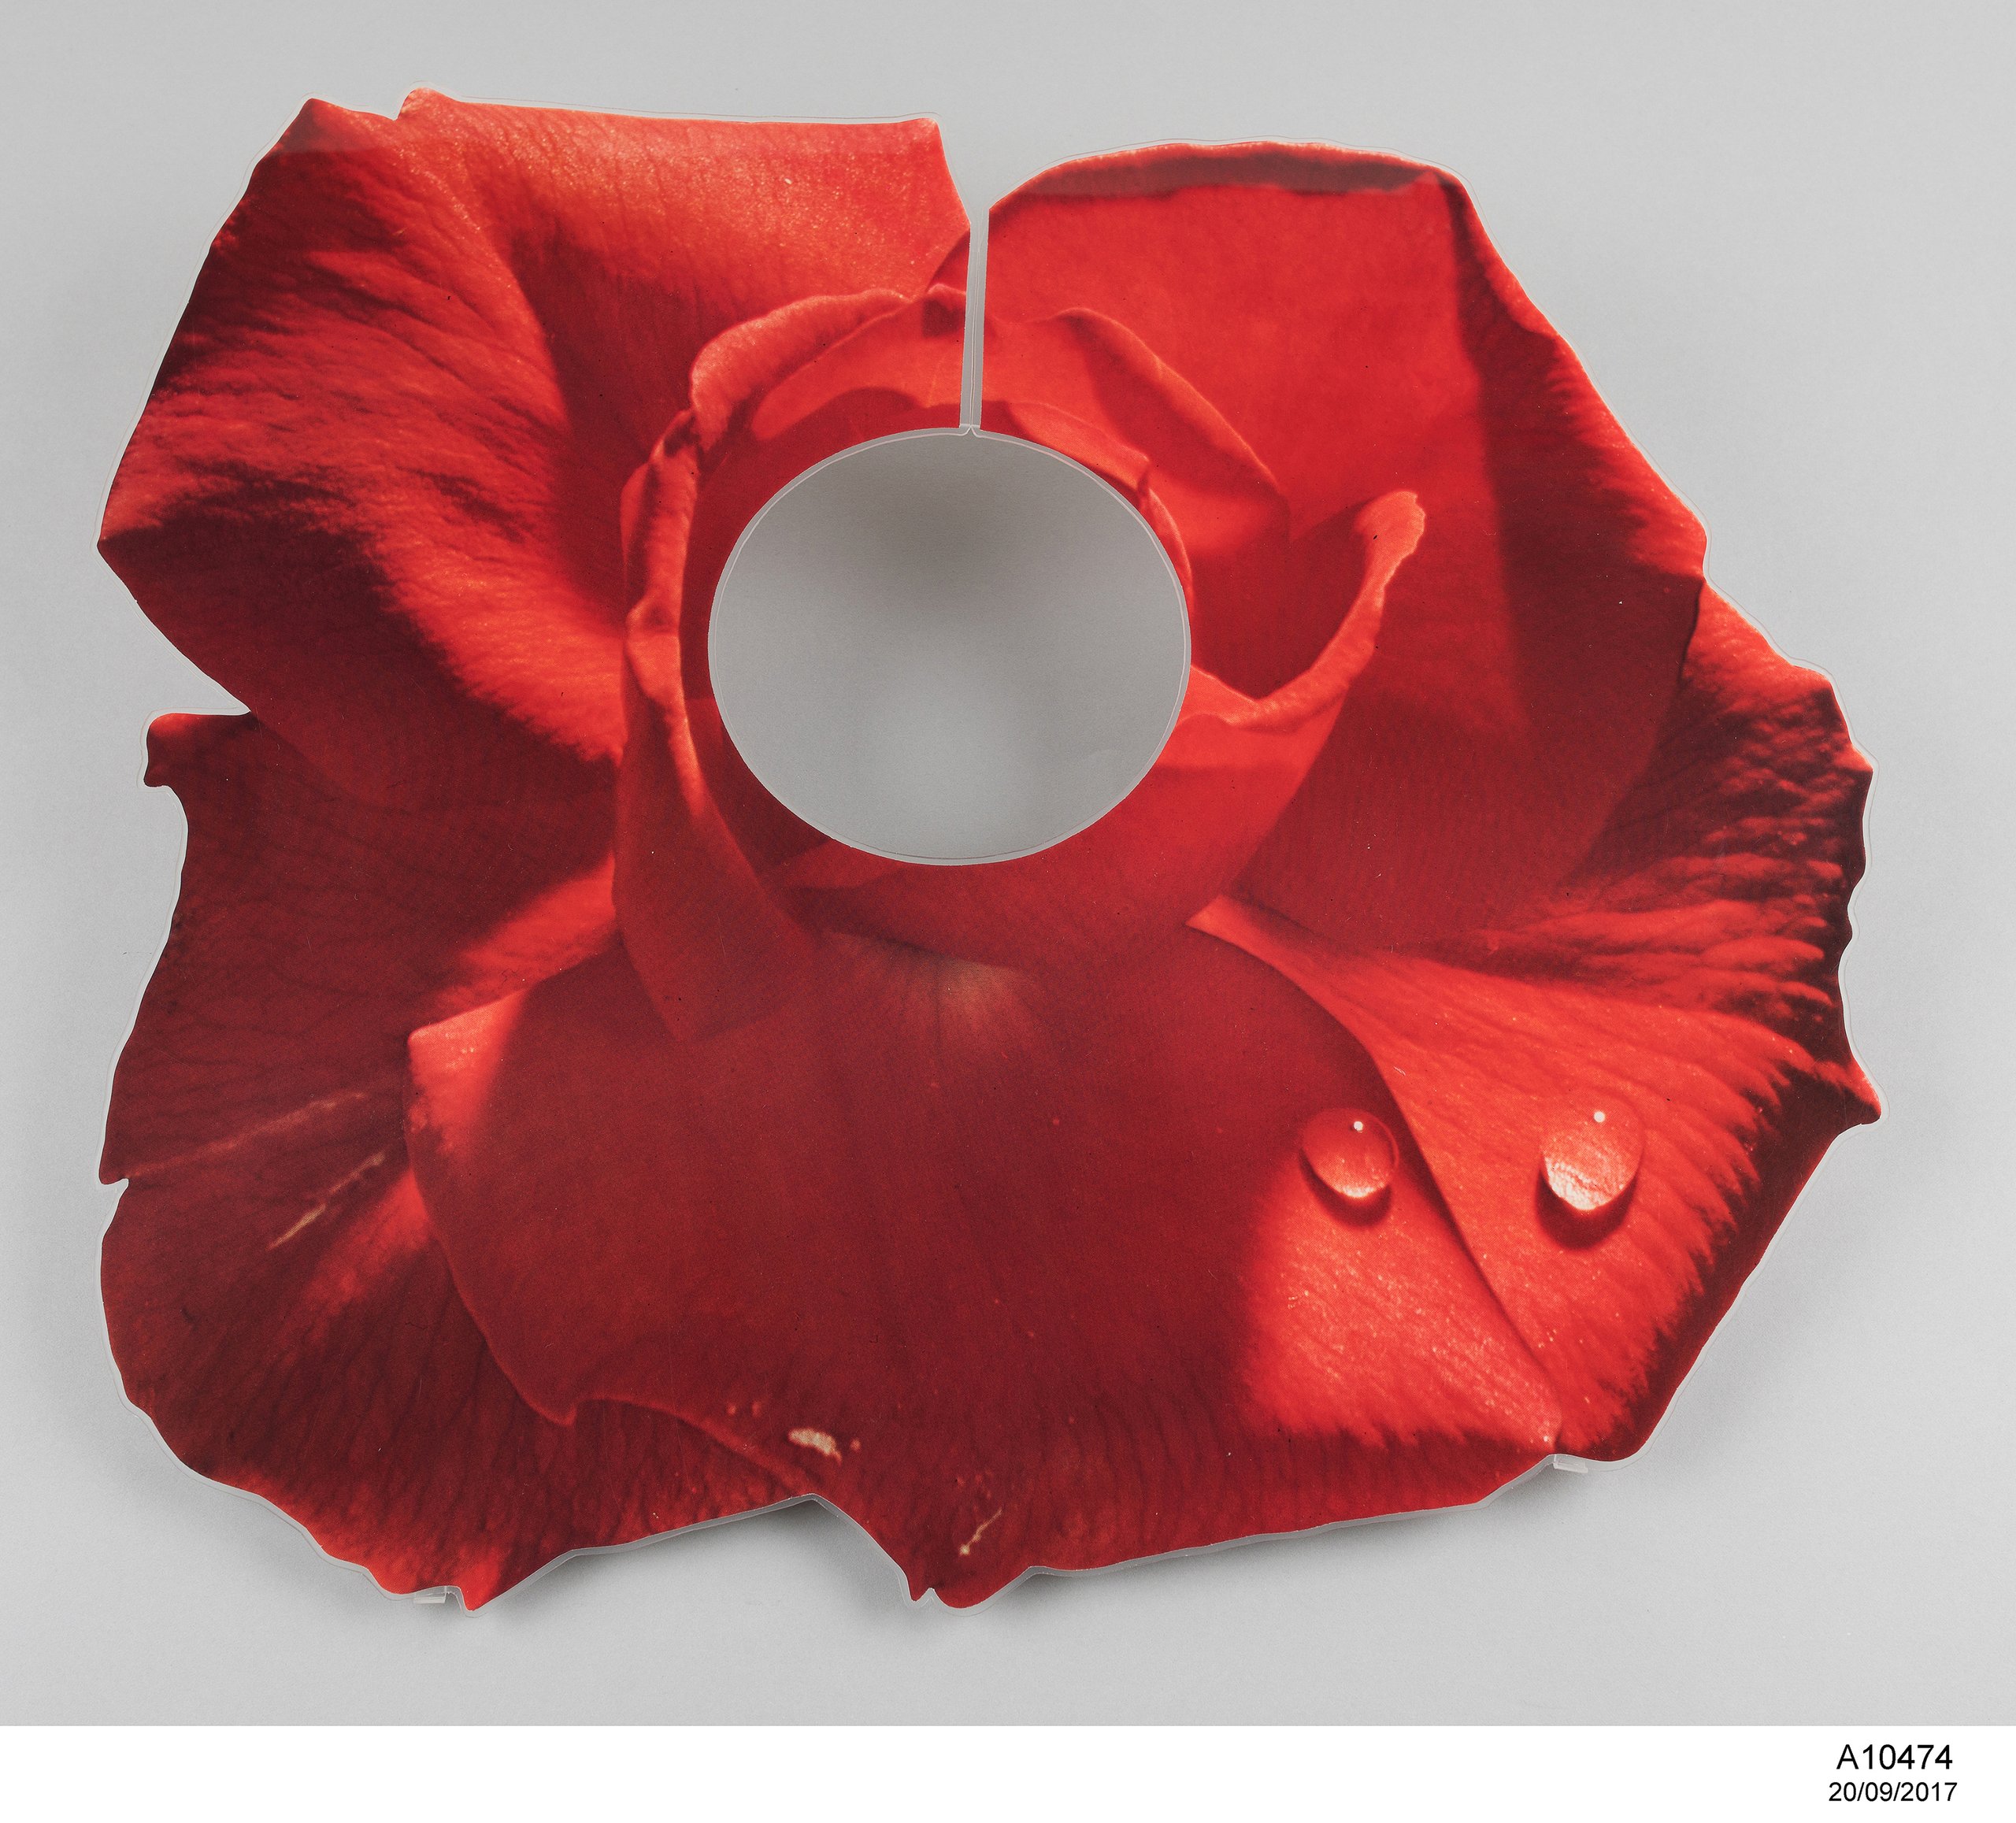 'Dew Drop' neckpiece made by Gijs Bakker